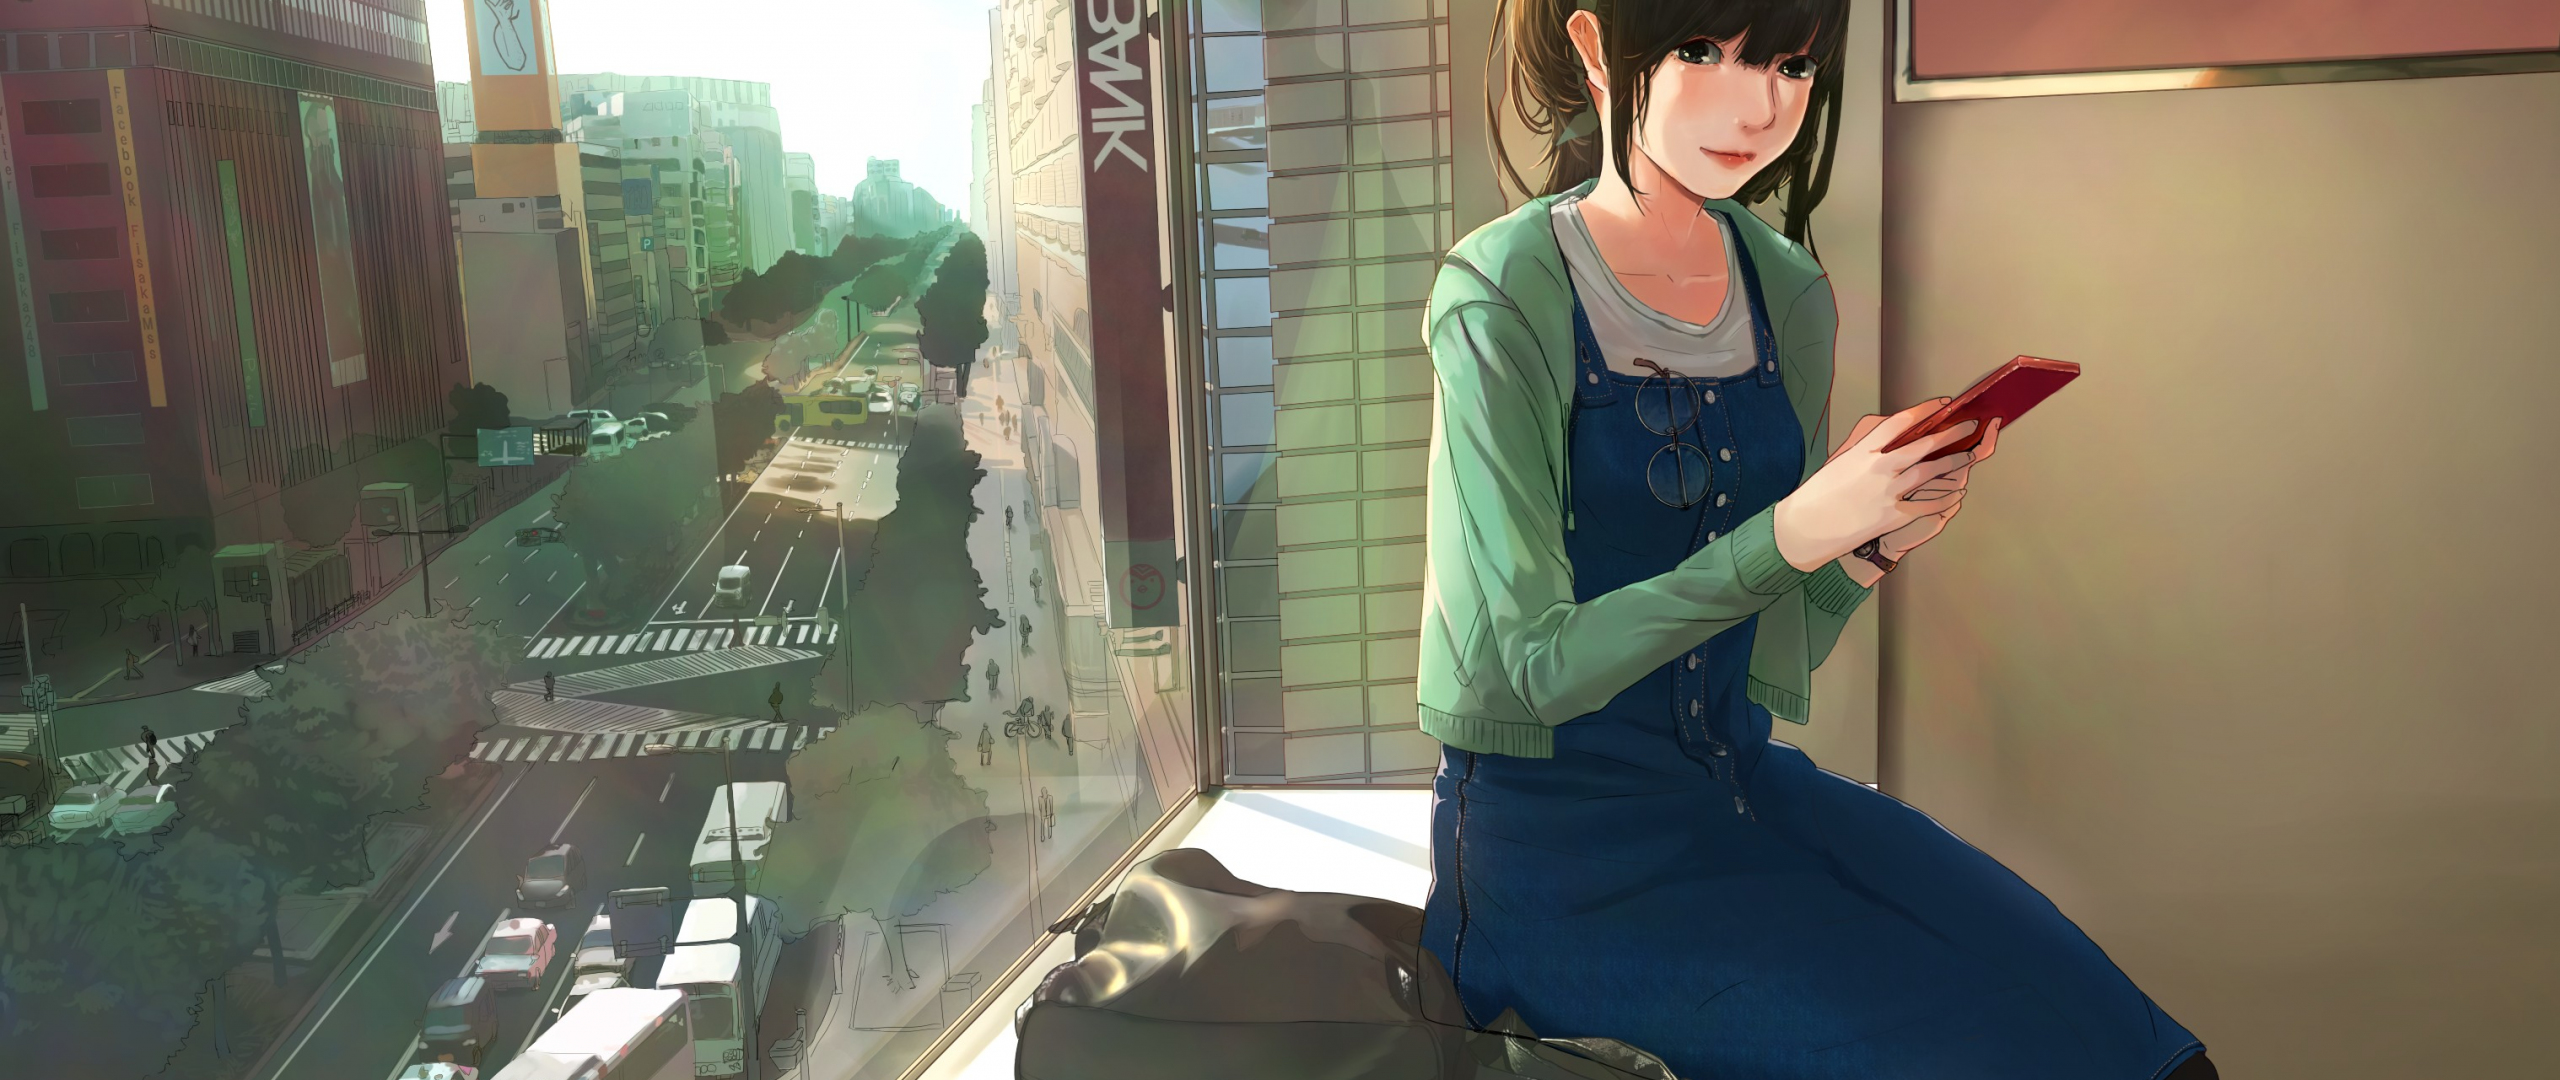 Desktop Wallpaper Original, Anime Girl, Sitting At Balcony, HD Image, Picture, Background, 8fd1e7